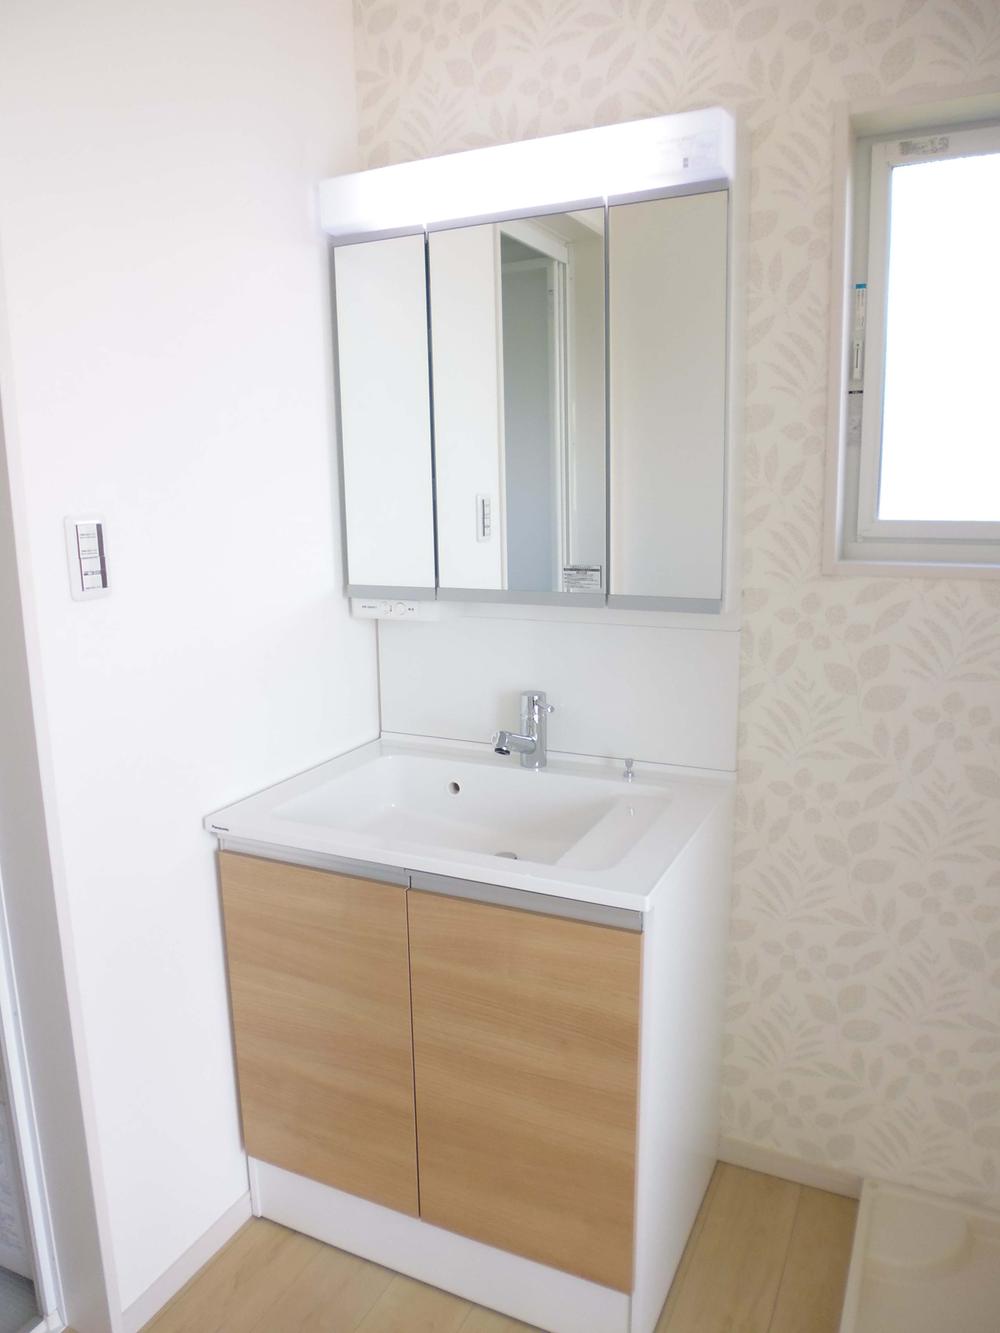 Wash basin, toilet. Convenient three-sided mirror,